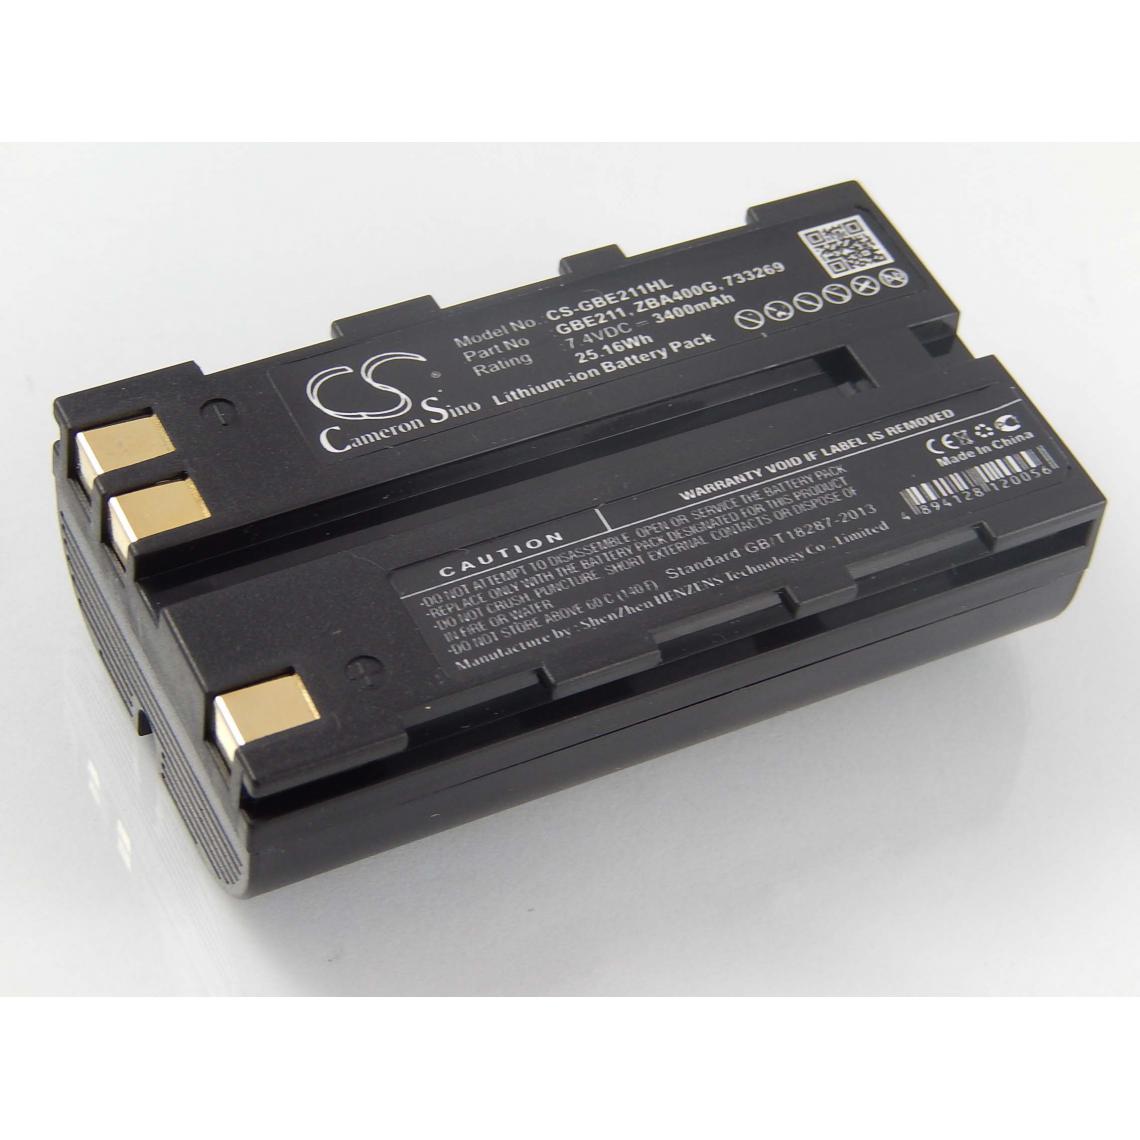 Vhbw - vhbw Batterie compatible avec Leica TPS400, TPS700, TPS800, TS02 dispositif de mesure laser, outil de mesure (3400mAh, 7,4V, Li-ion) - Piles rechargeables